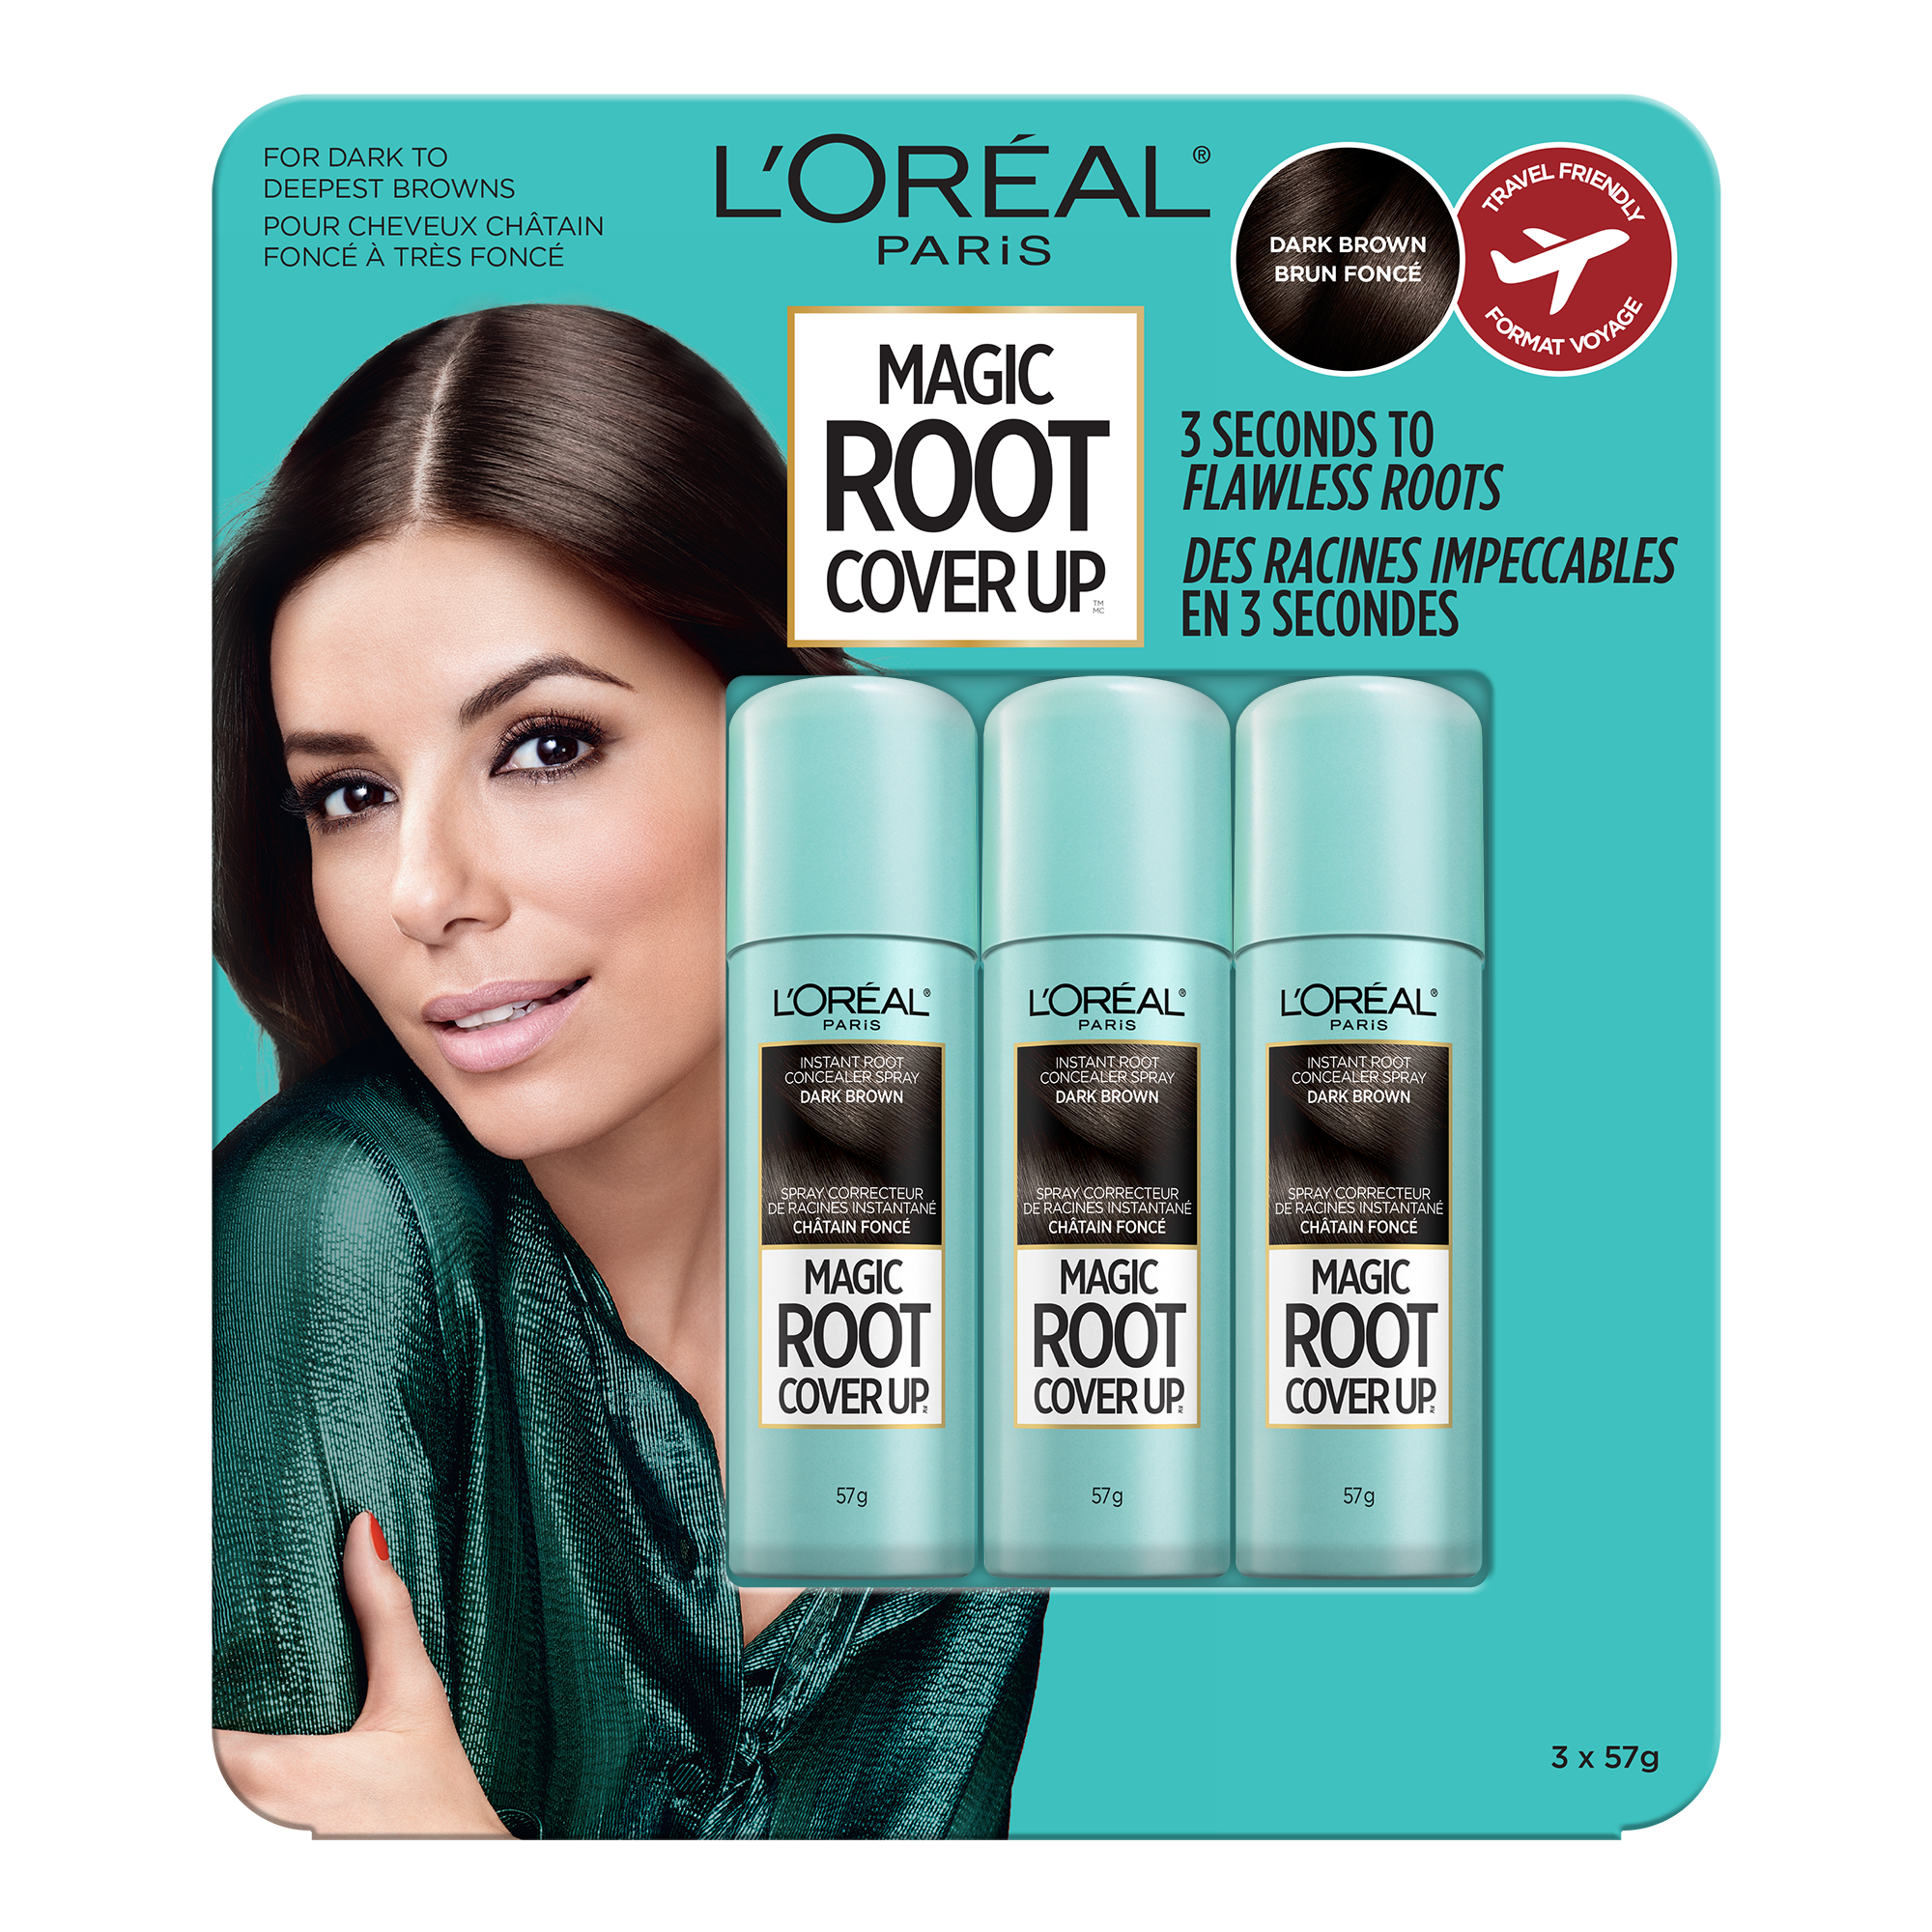 L'Oréal Paris Magic Root Cover Up product review #ad - Costco East Fan Blog